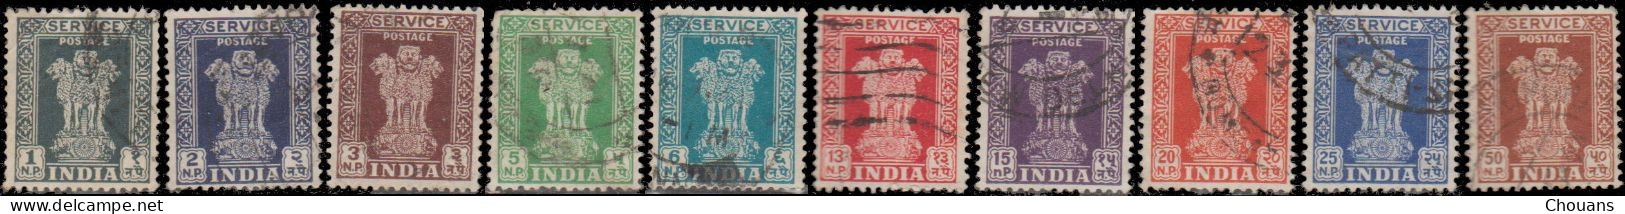 Inde Service 1957/58 - S 14 à 22 -  Colonne D'Asoka - Dienstmarken